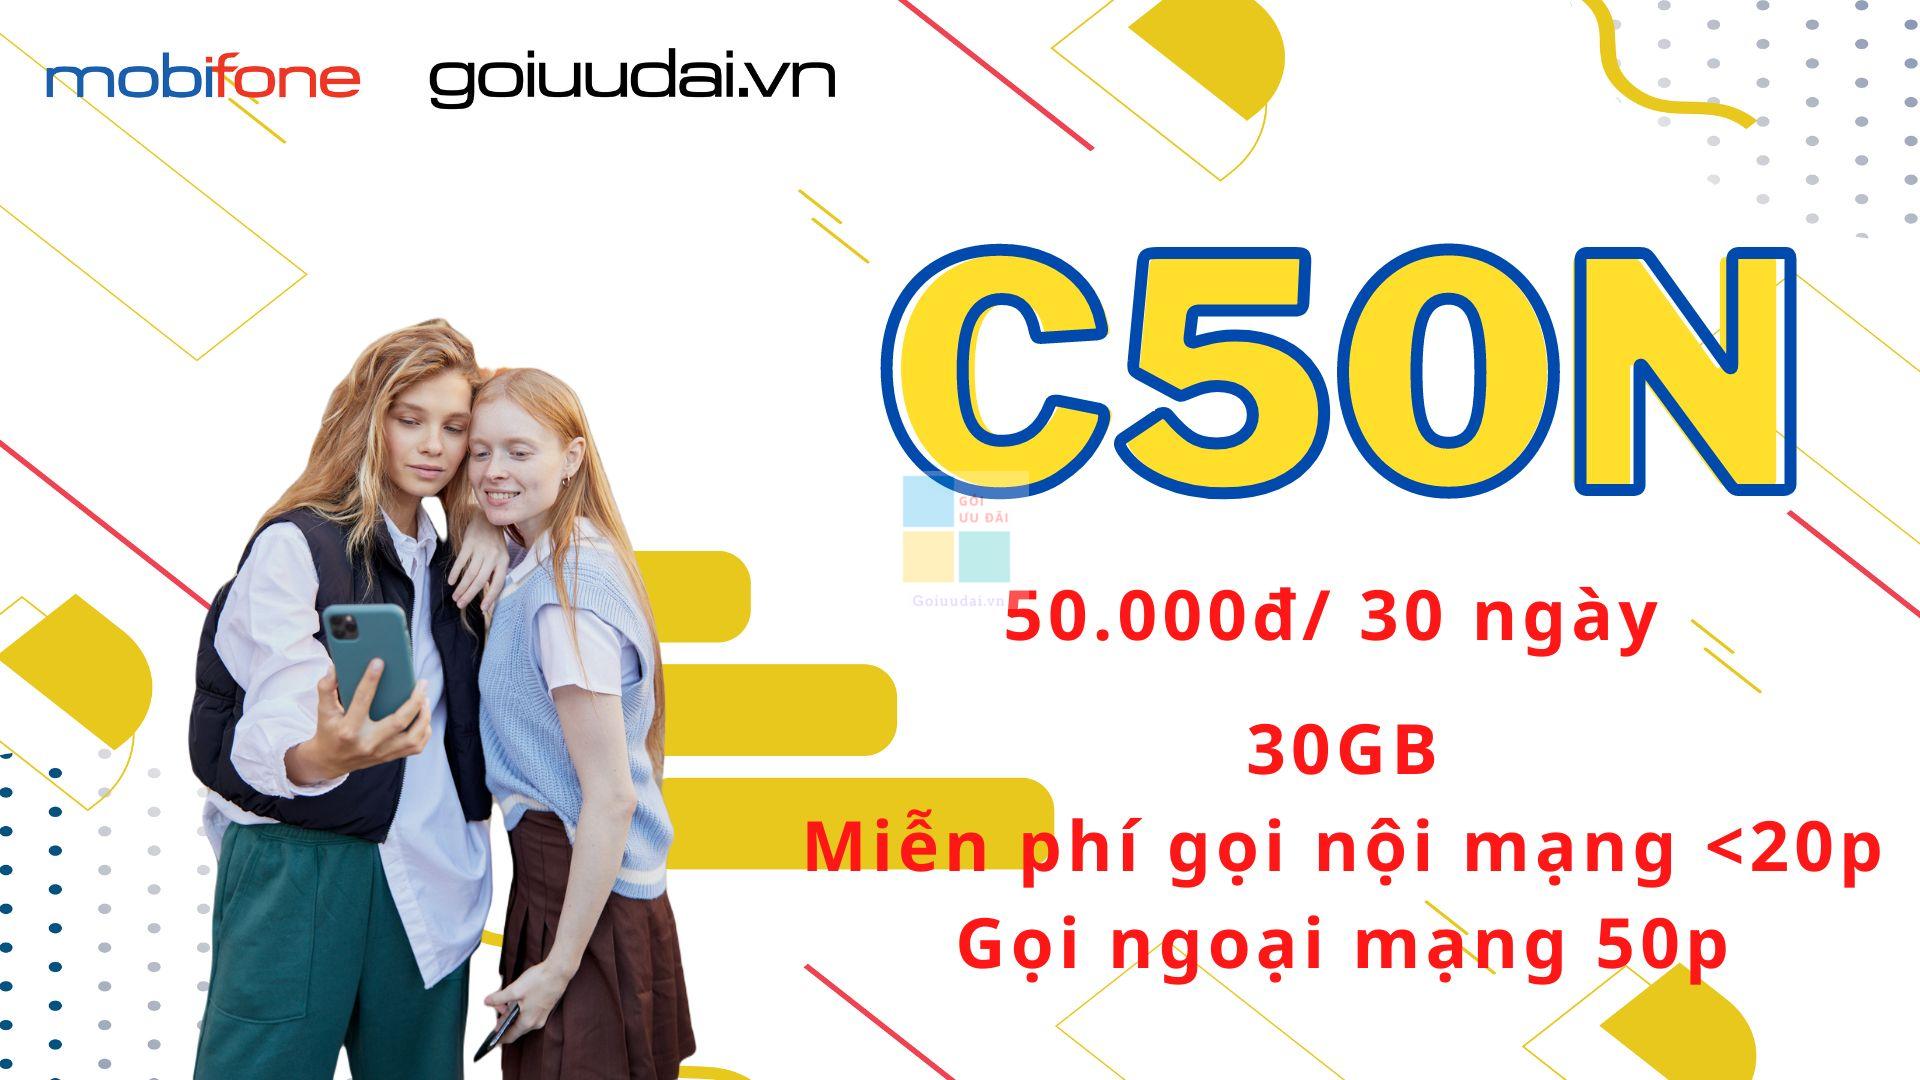 2. gói C50N Mobifone